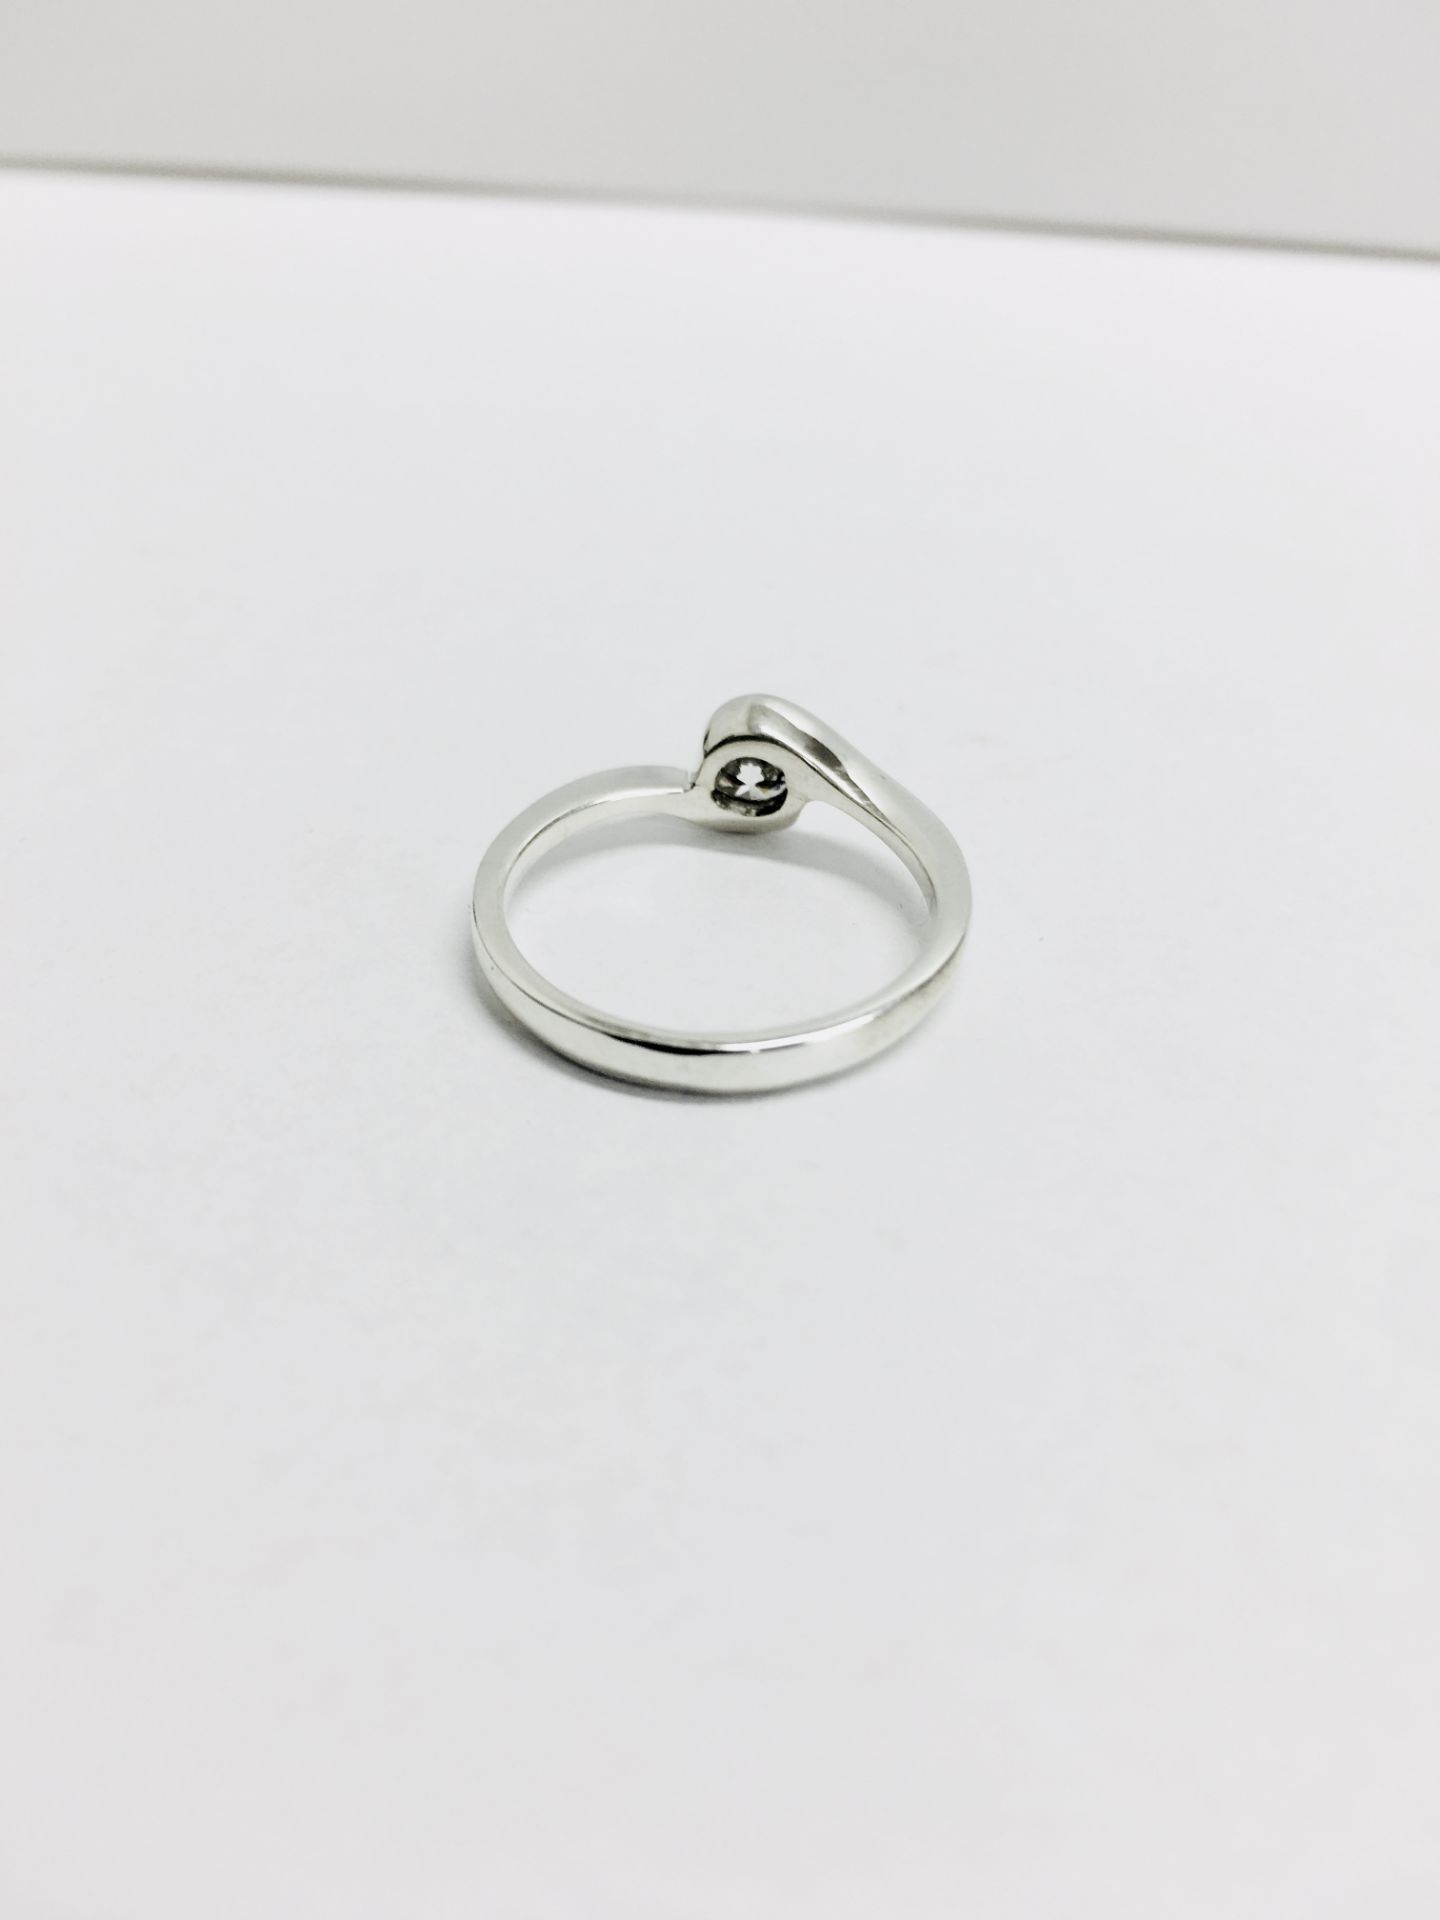 platinum diamond twist style ring,0.50ct E colour vvs2 clarity ,5.89gms platinum,uk size K,uk - Image 4 of 5